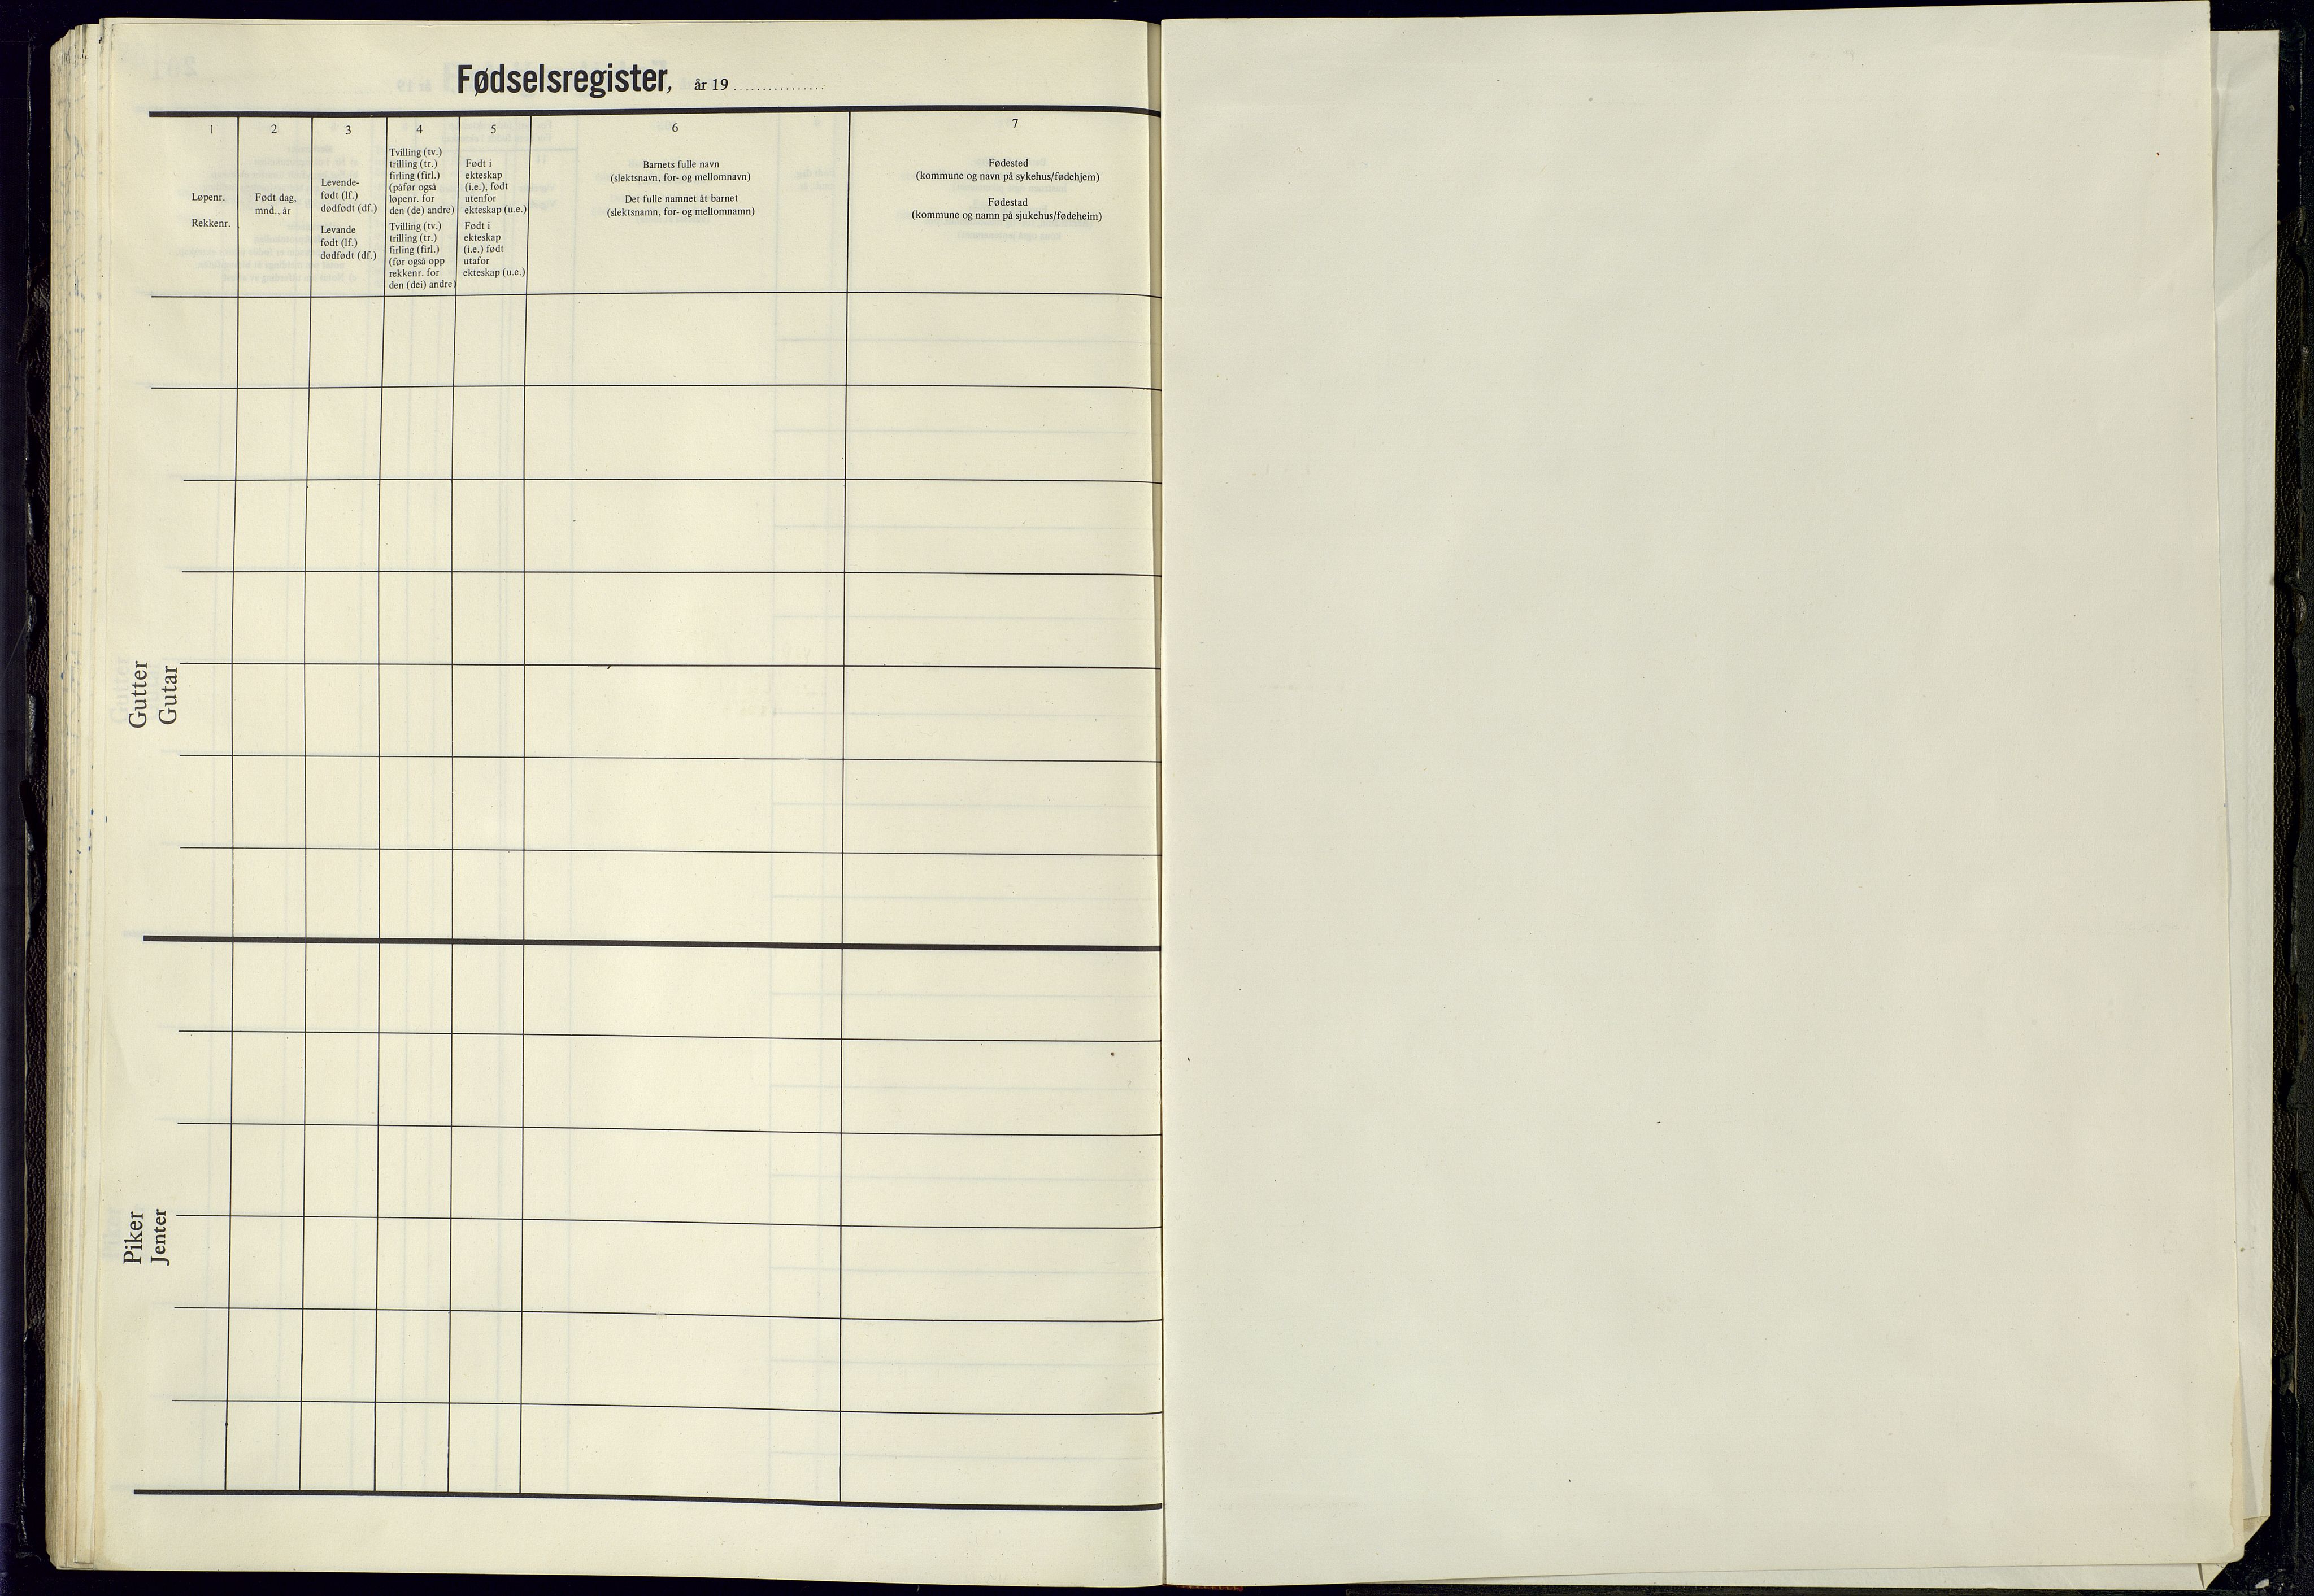 Oddernes sokneprestkontor, SAK/1111-0033/J/Ja/L0008: Birth register no. 8, 1971-1982